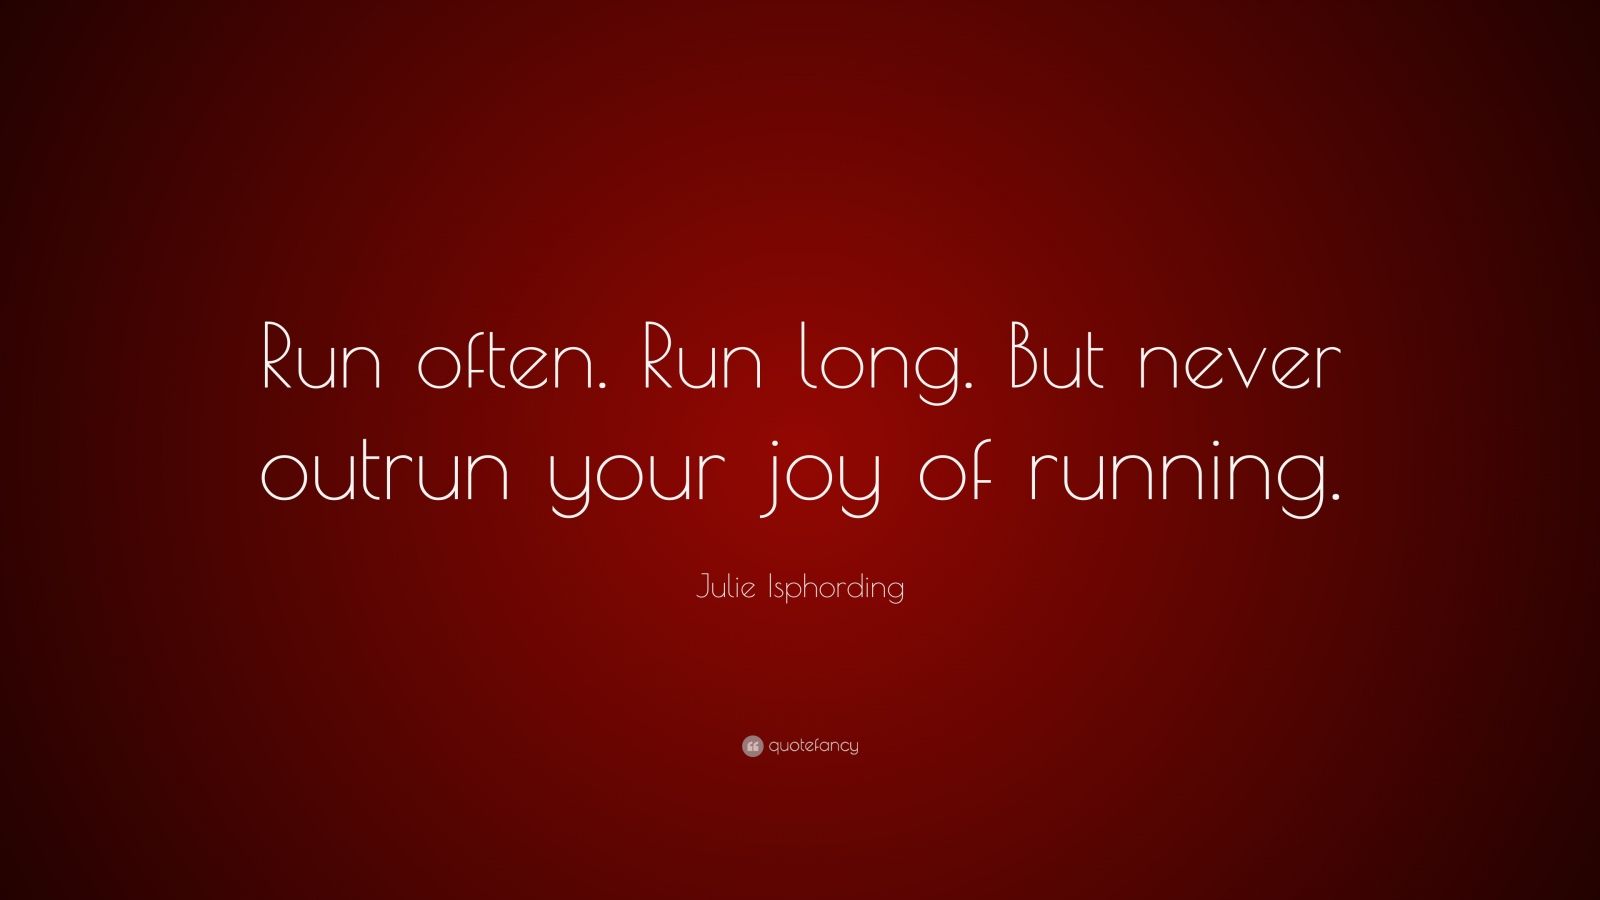 Julie Isphording Quote: “Run often. Run long. But never outrun your joy ...